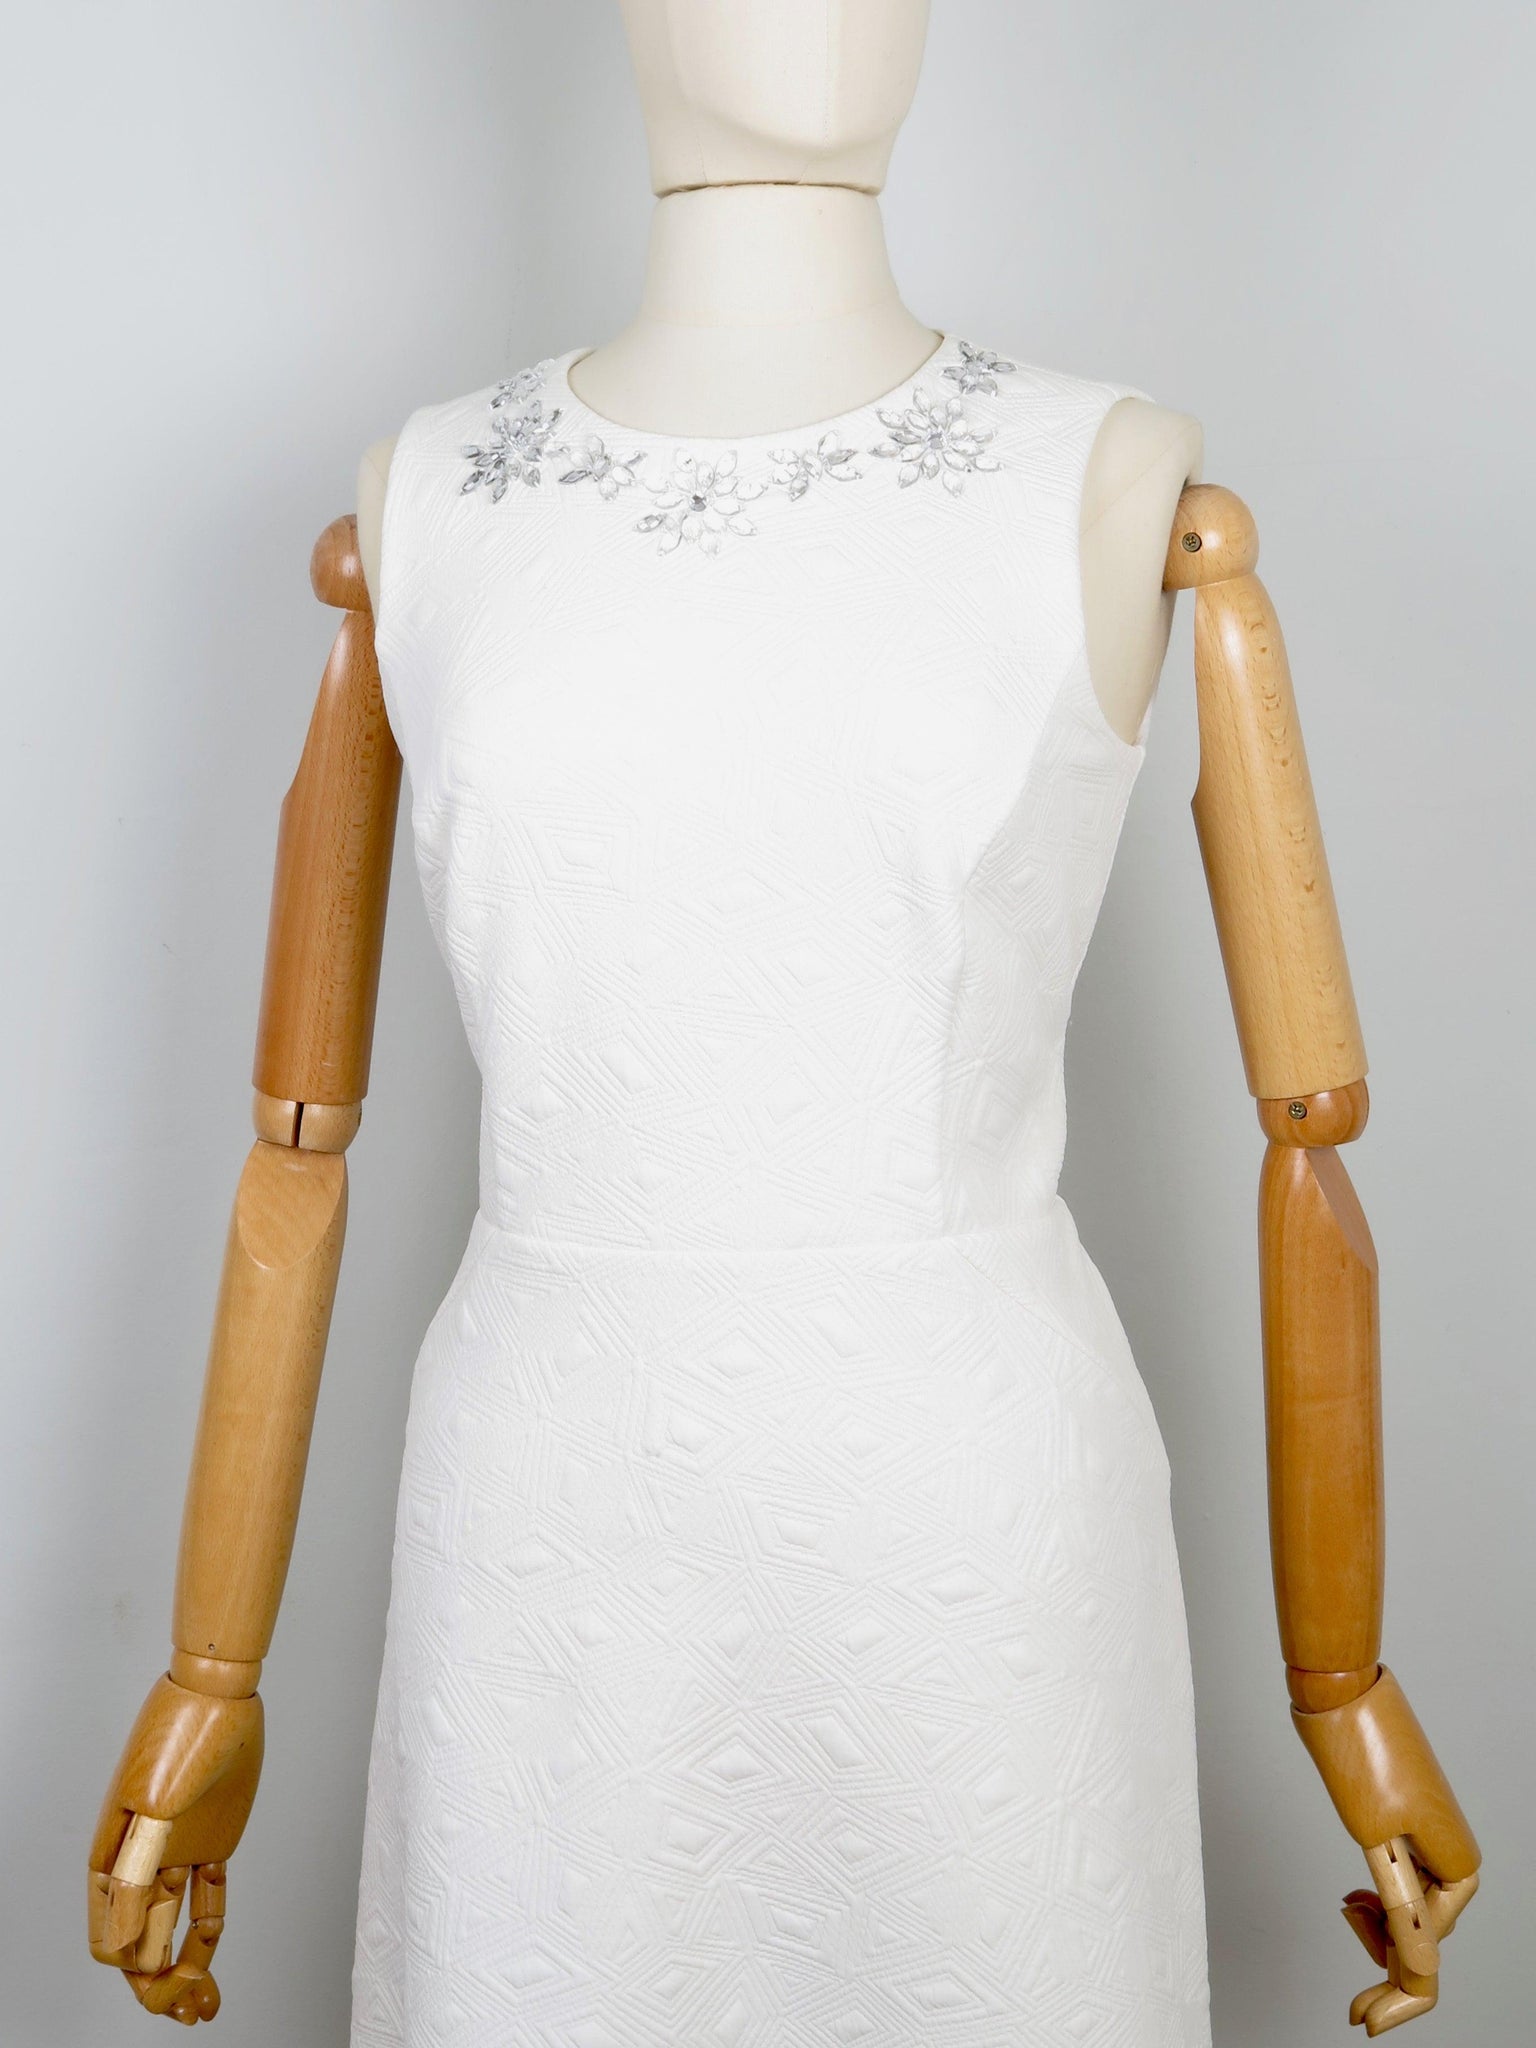 Cream Retro 1960s Short Wedding Dress 12 - The Harlequin